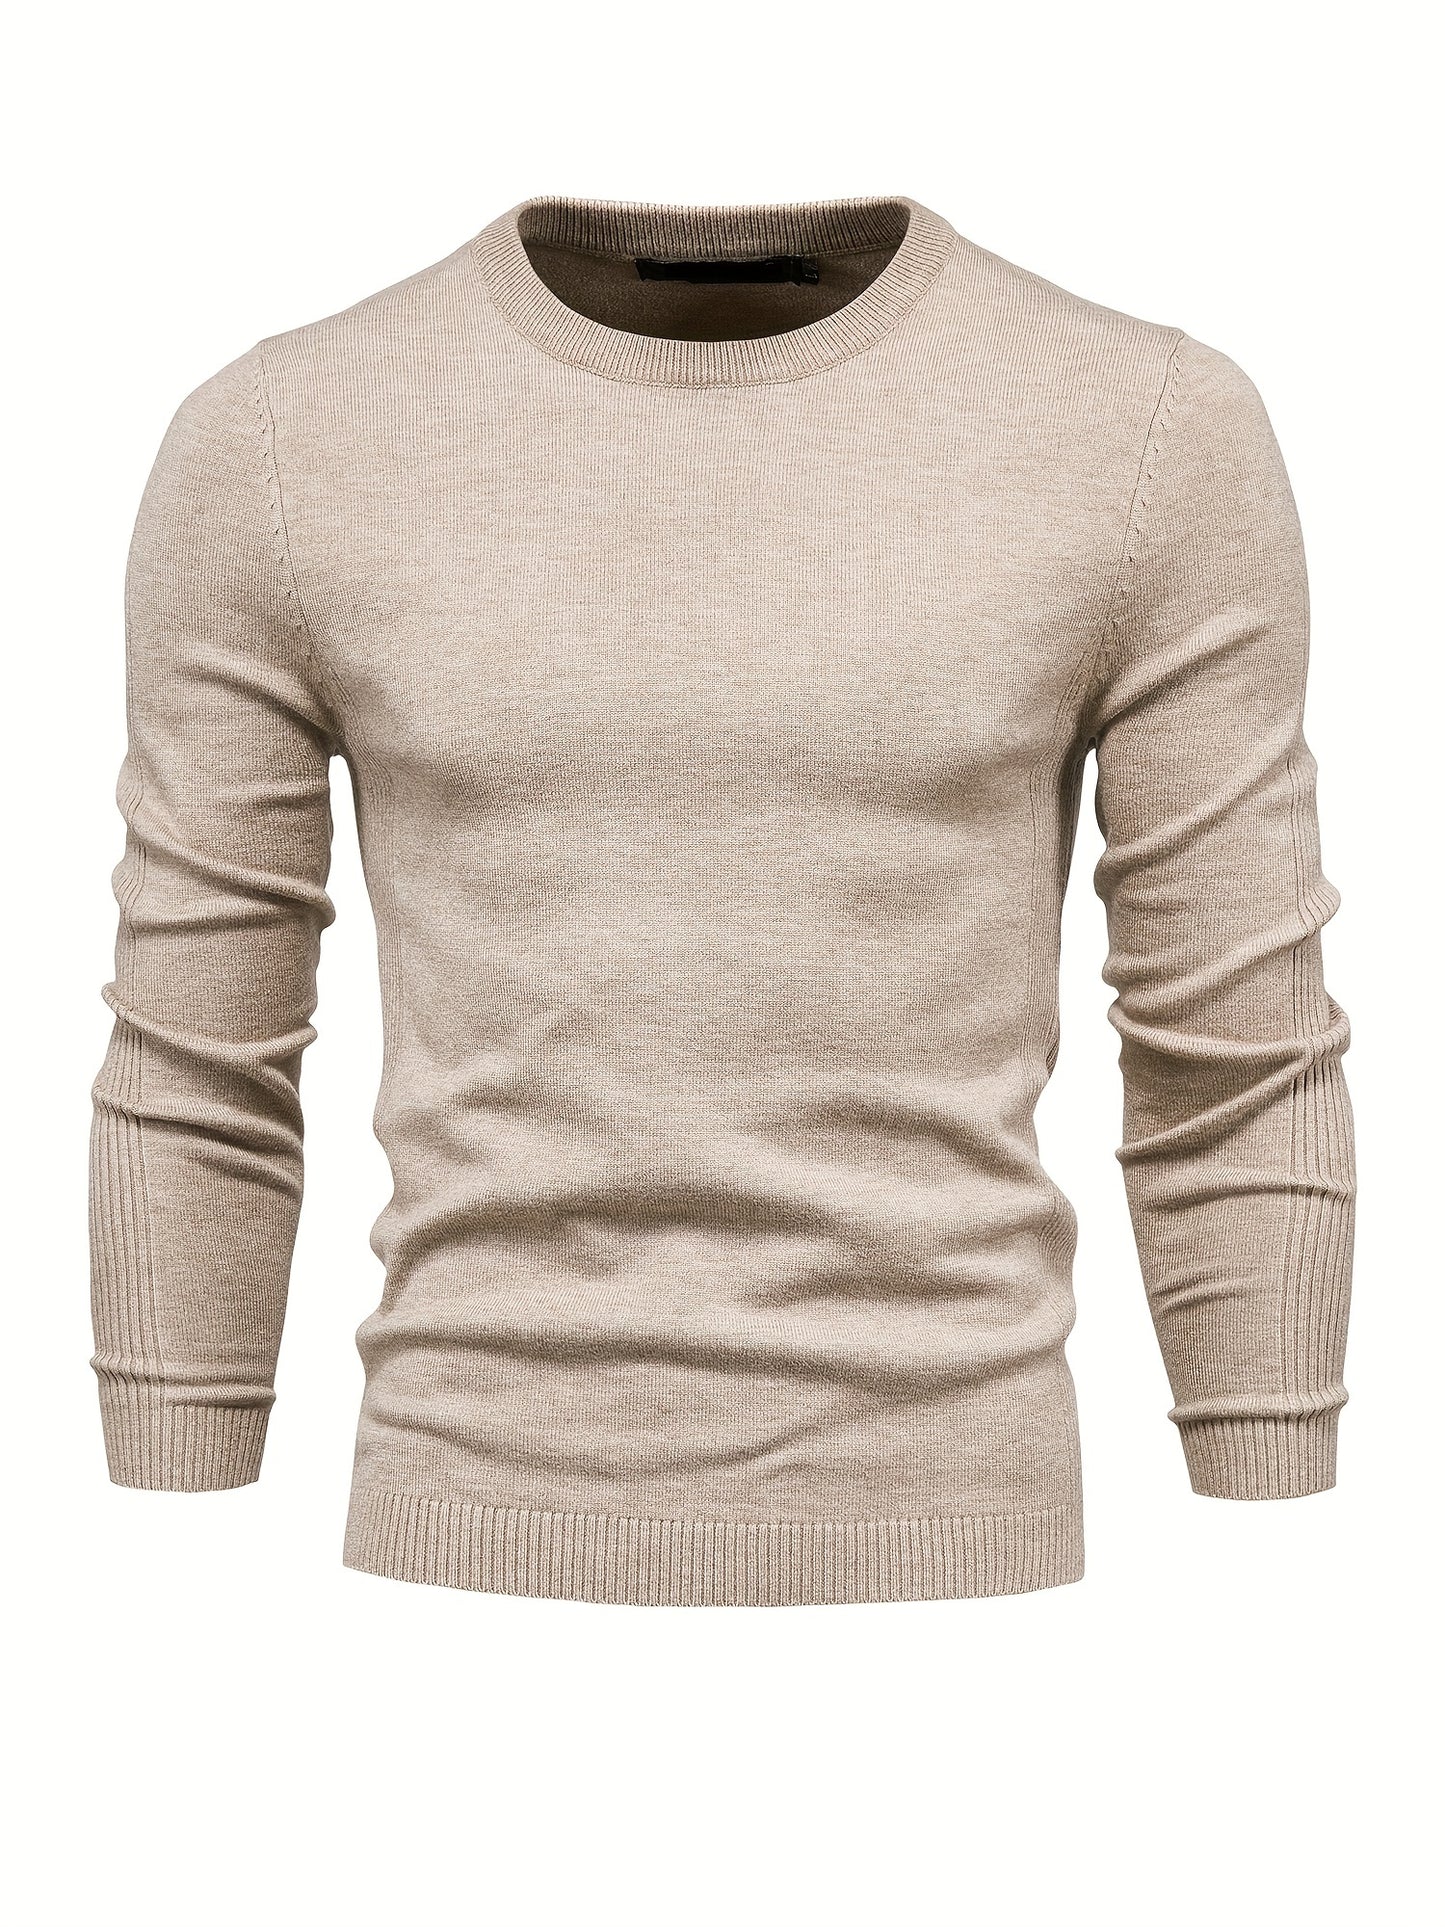 Foruwish - Men's Solid Color Crew Neck Slim Fit Knit Sweater